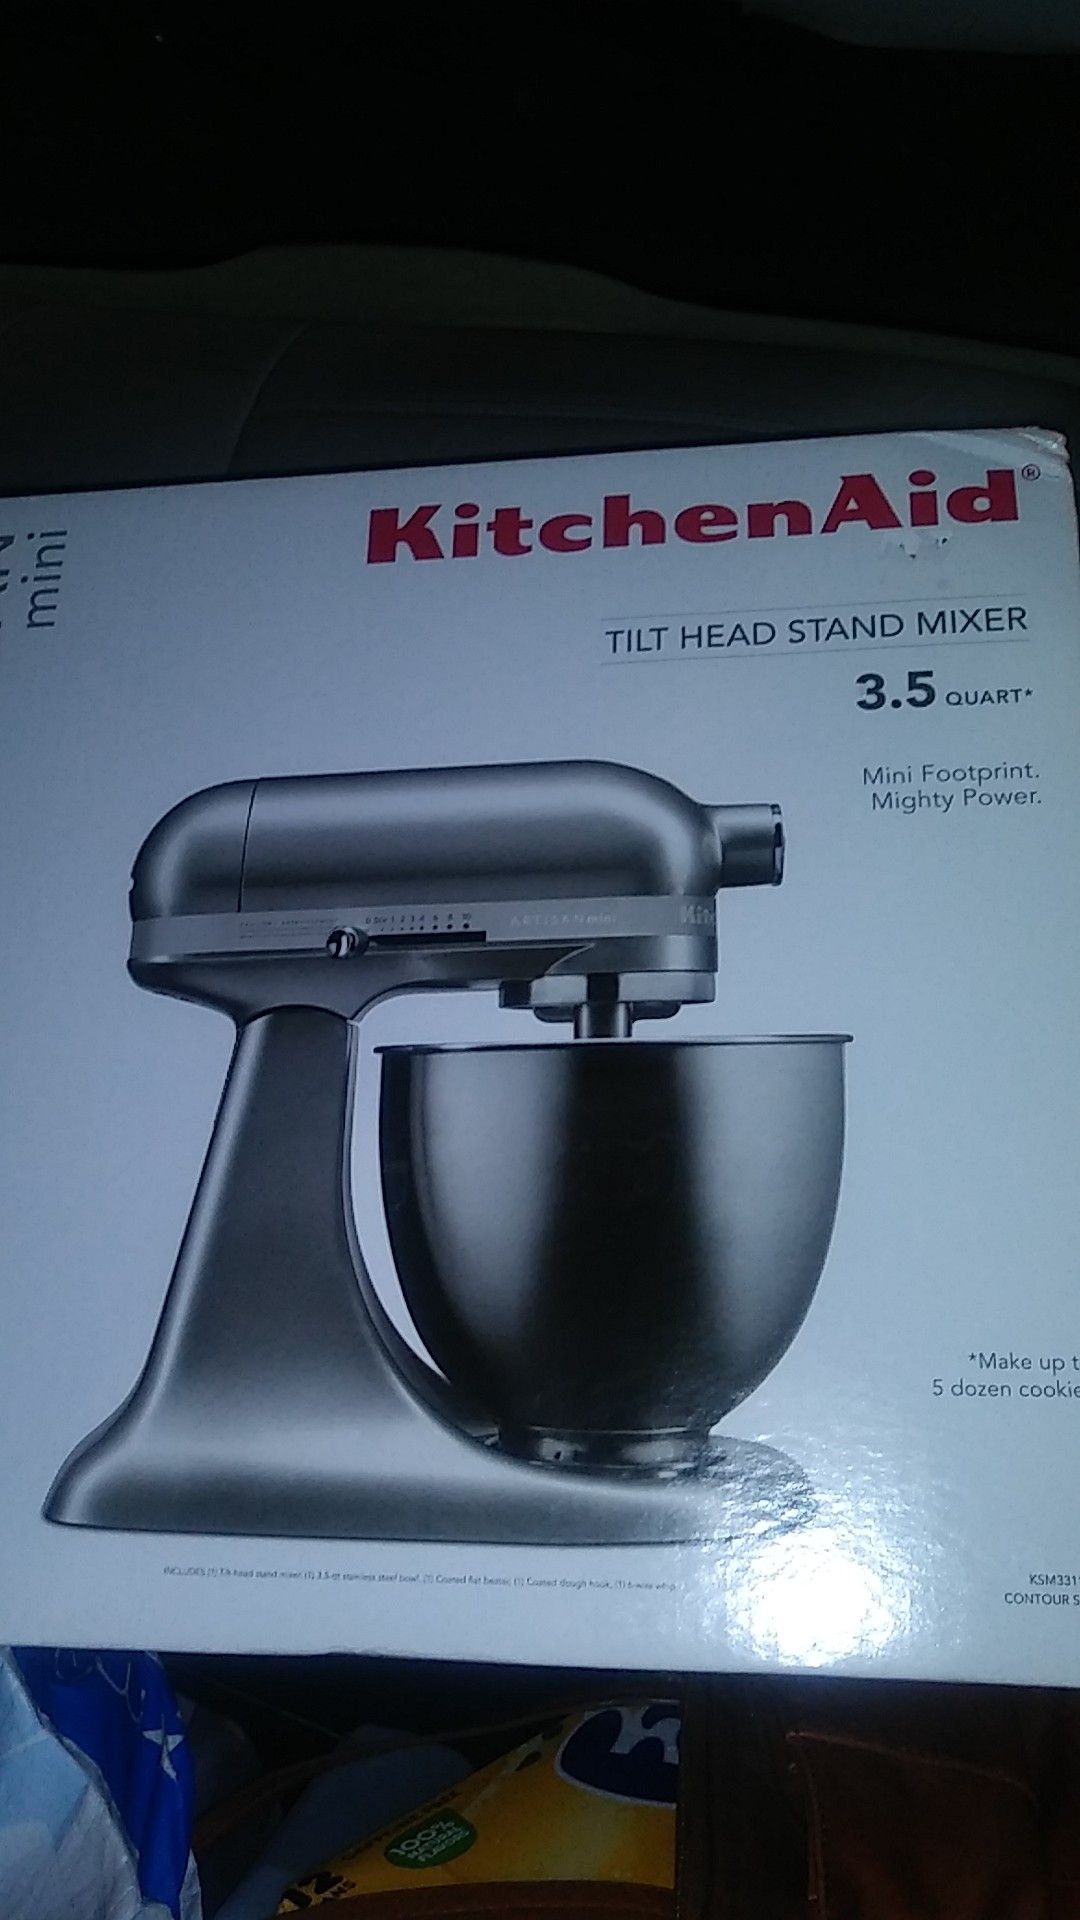 New kitchen aid tilt head stand mixer